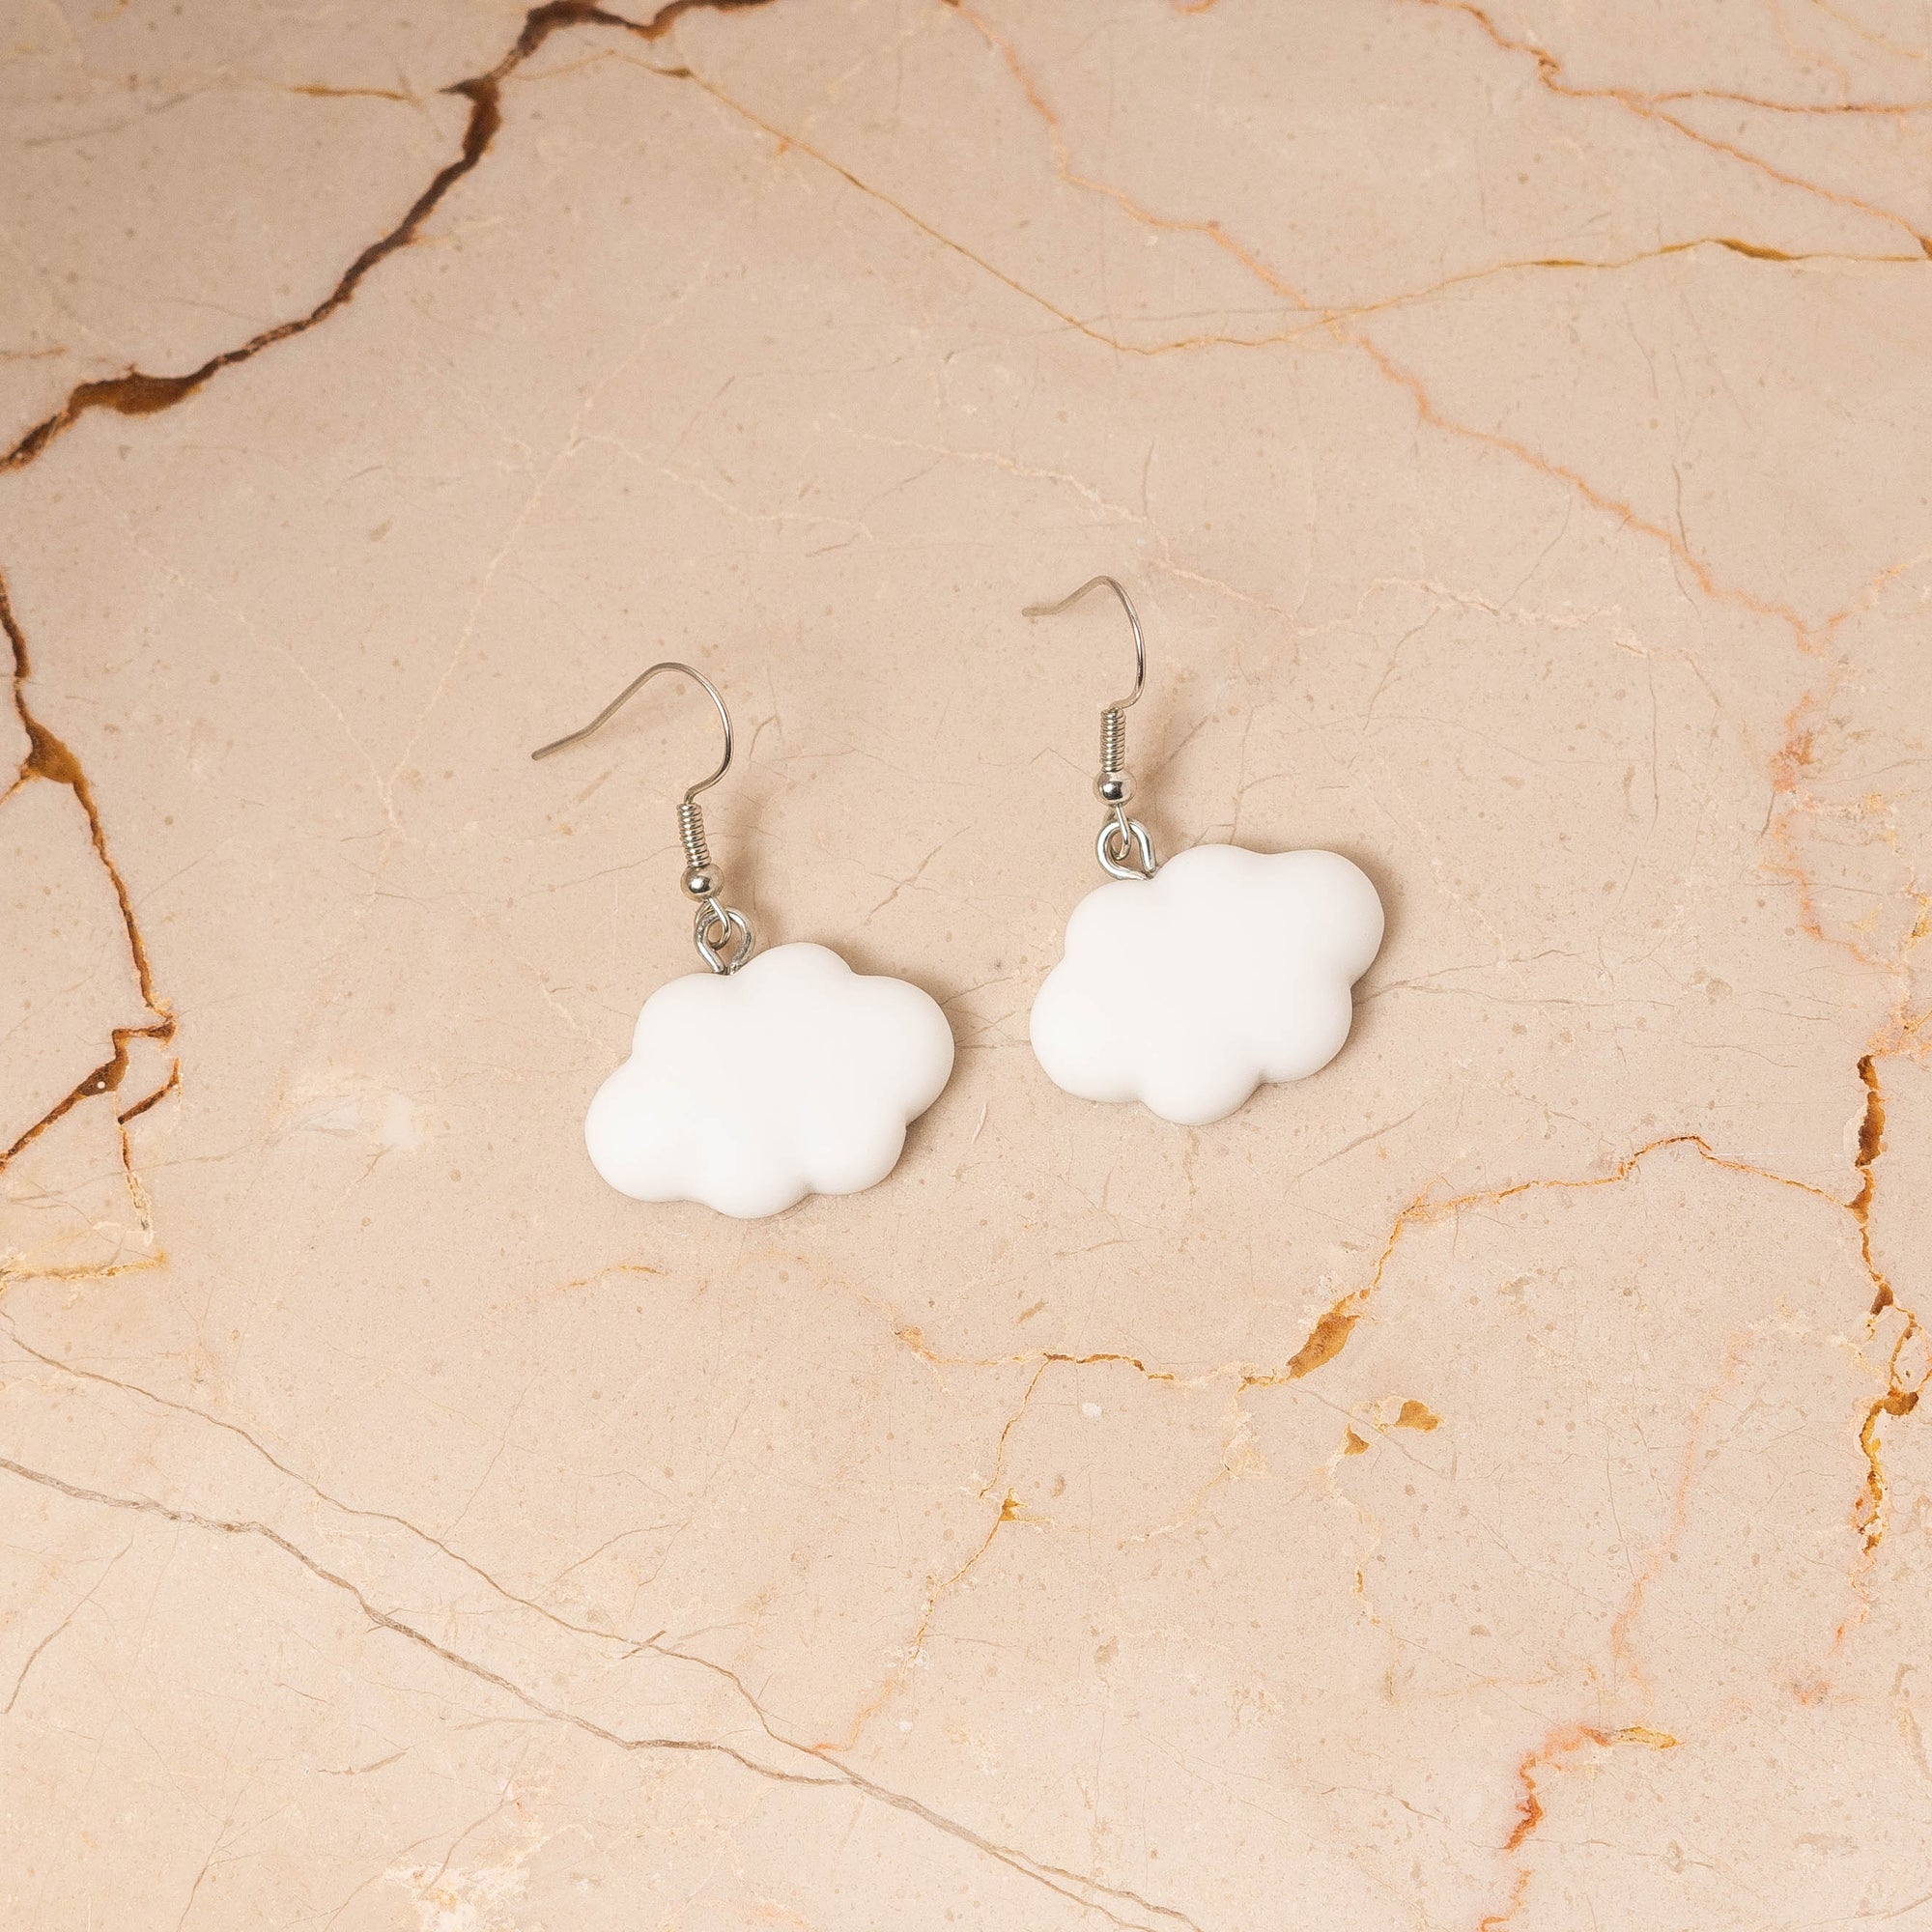 Cloud earrings